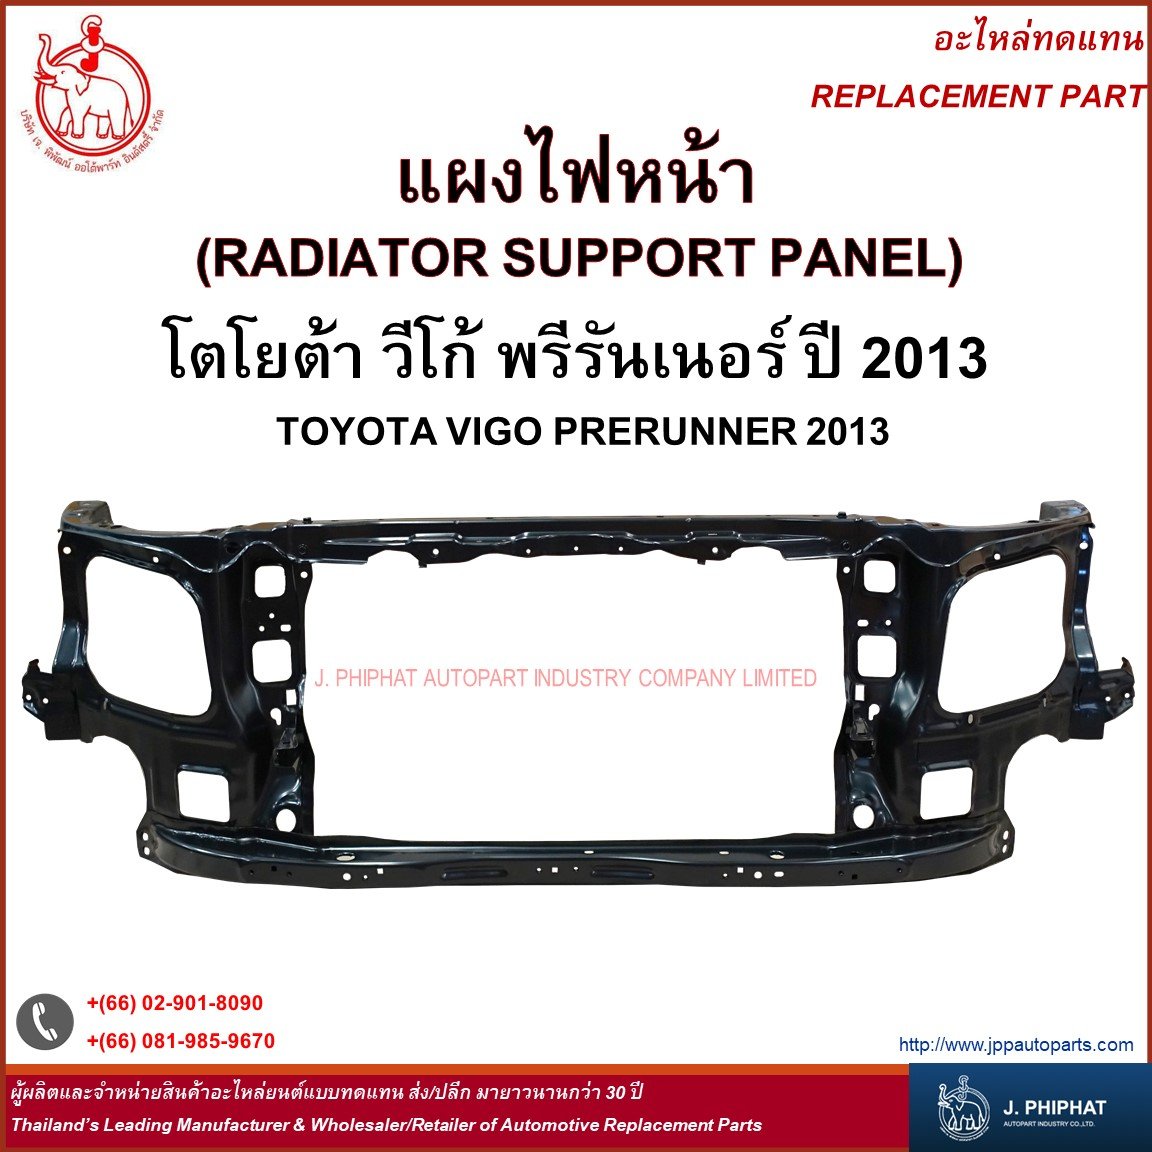 Radiator Support Panel - Toyota Vigo Prerunner 2013